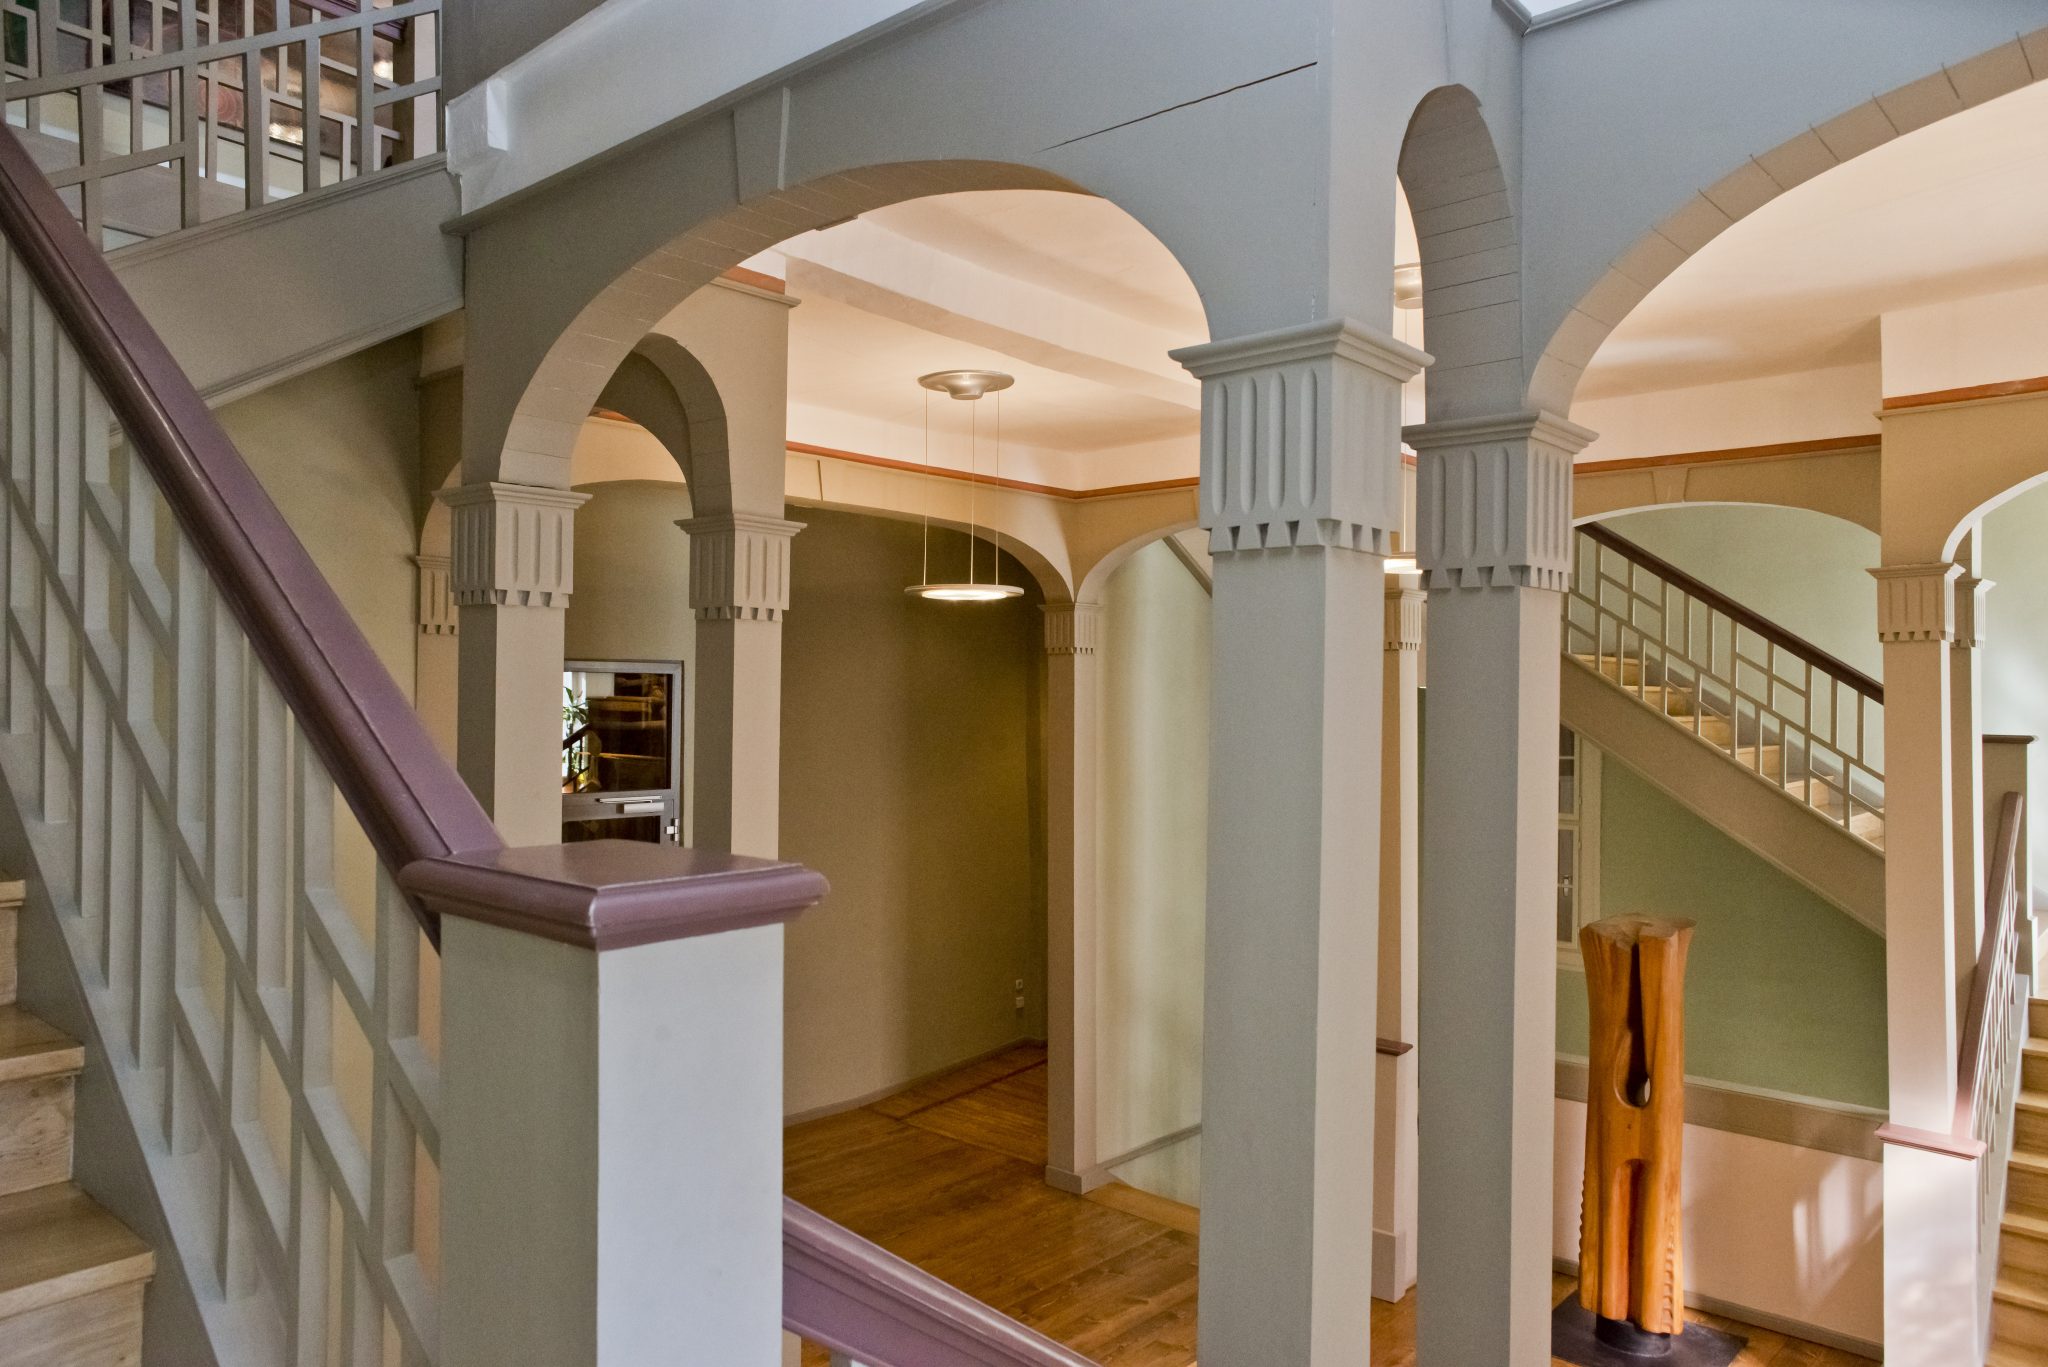 Blick in das treppenhaus im ersten Obergeschoss des Museumsgebäudes